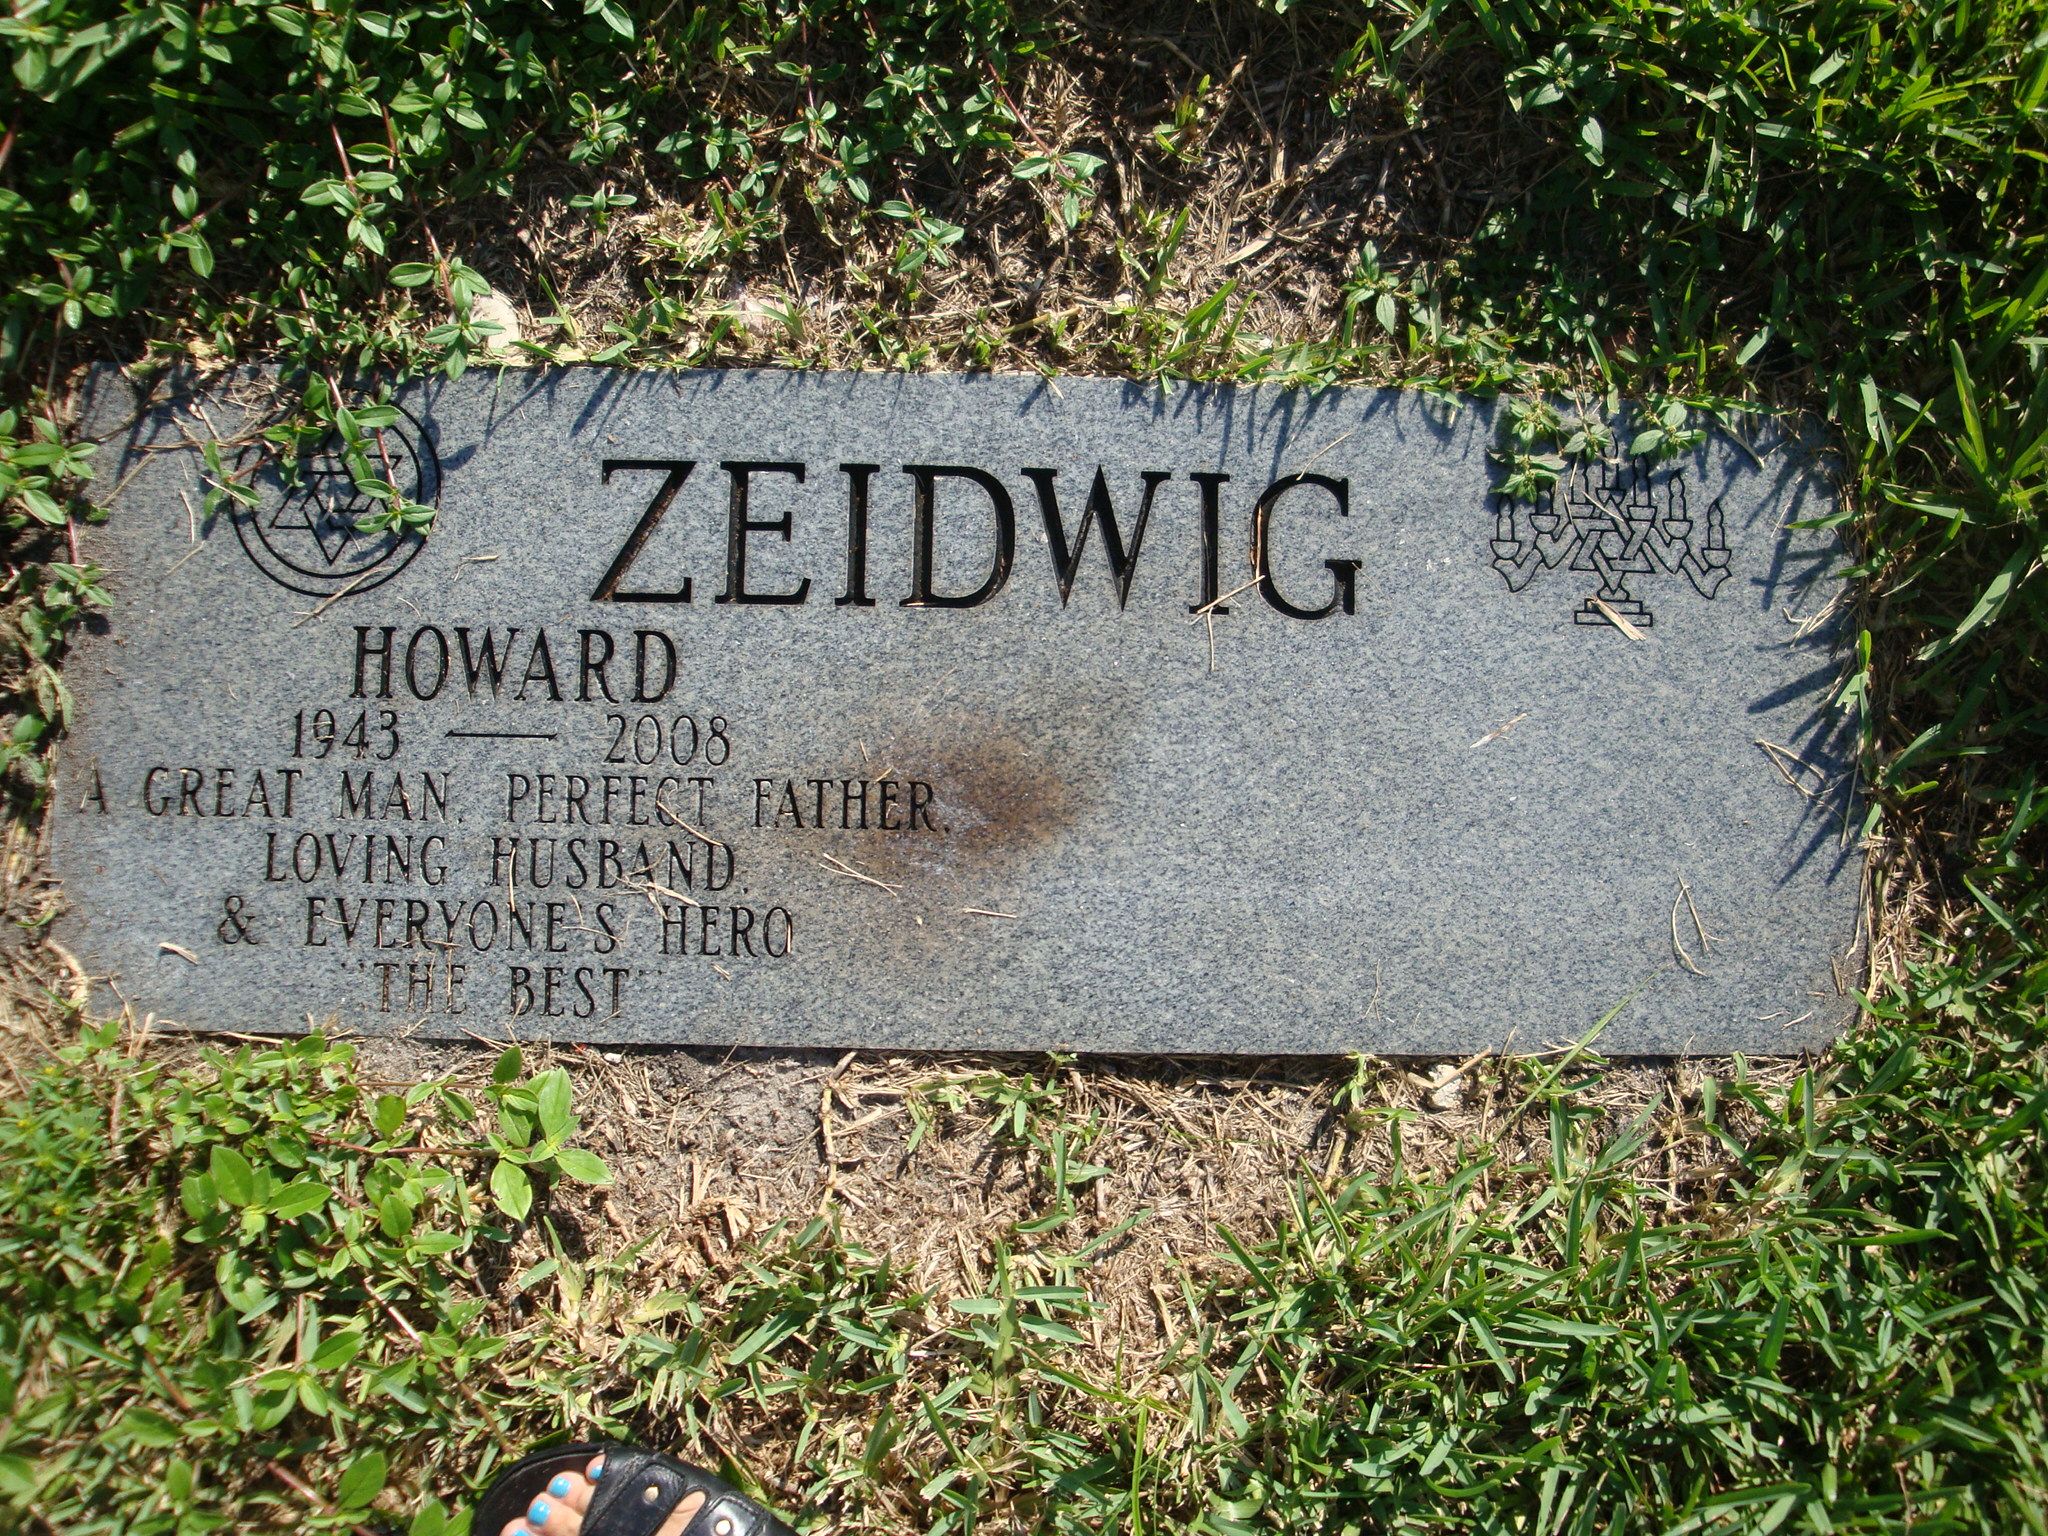 Howard Zeidwig